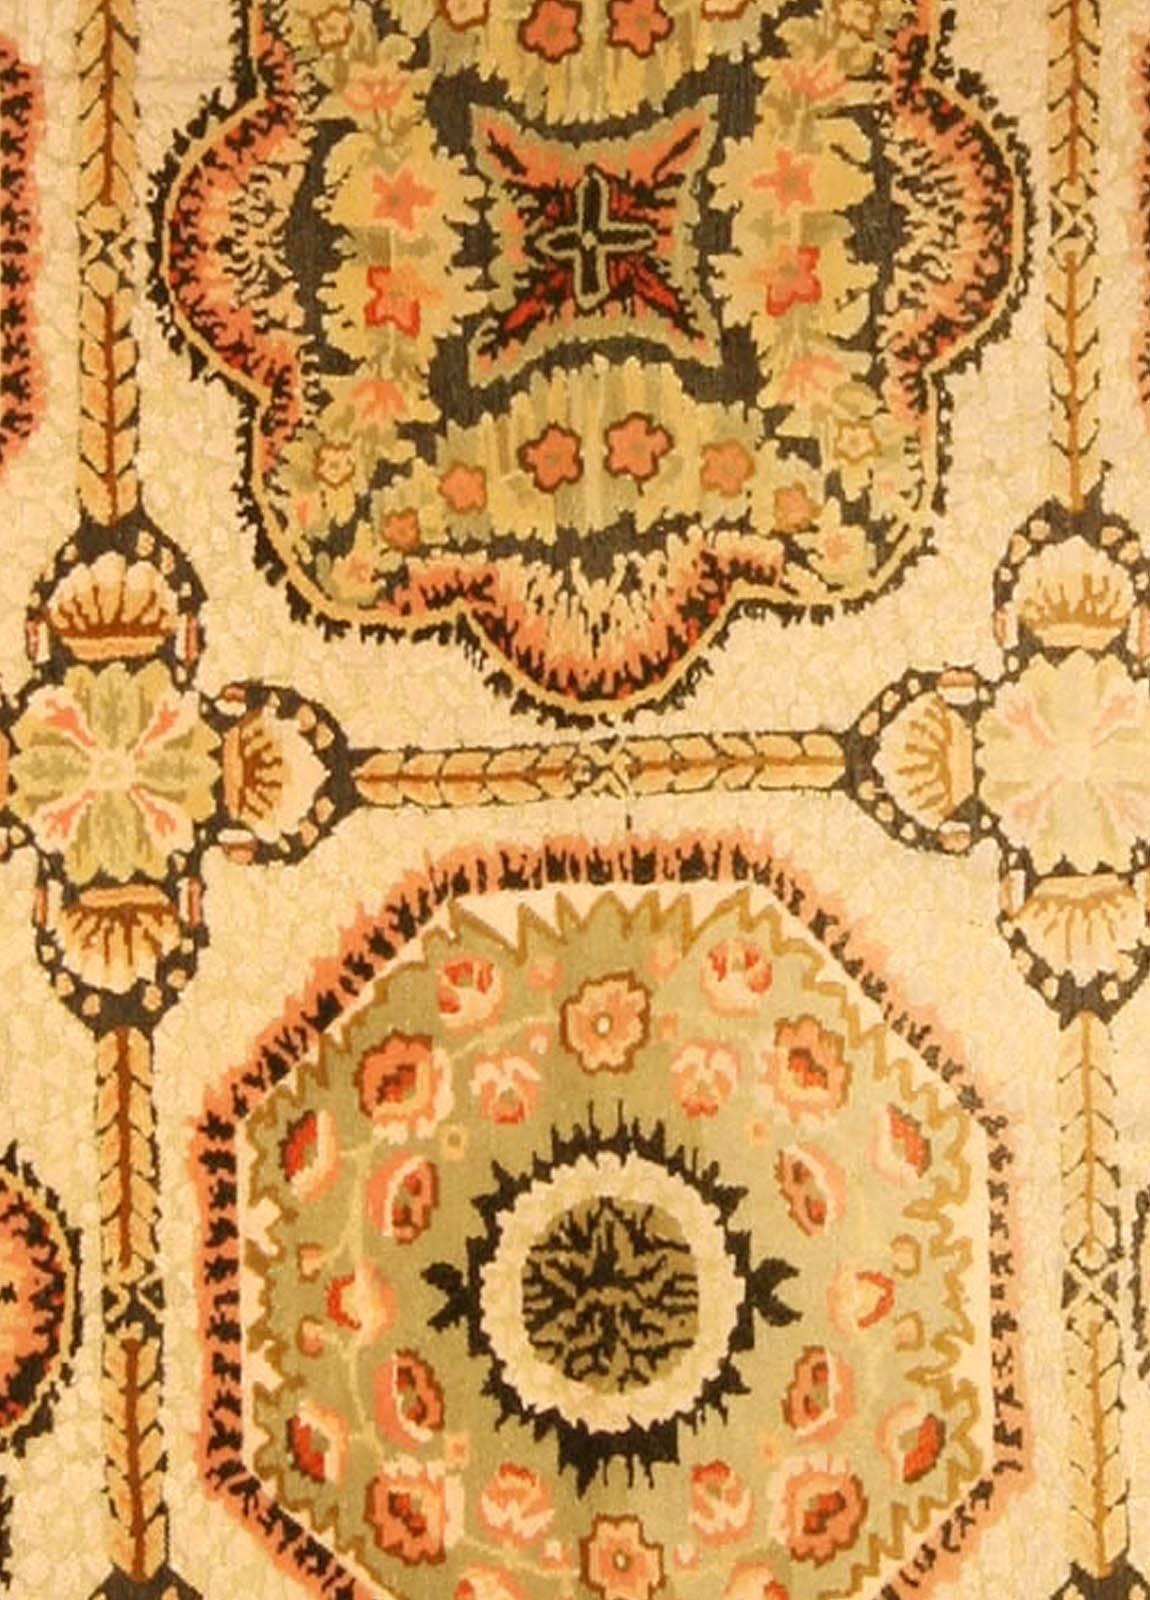 Contemporary Bessarabian floral design handmade wool rug by Doris Leslie Blau
Size: 8'5